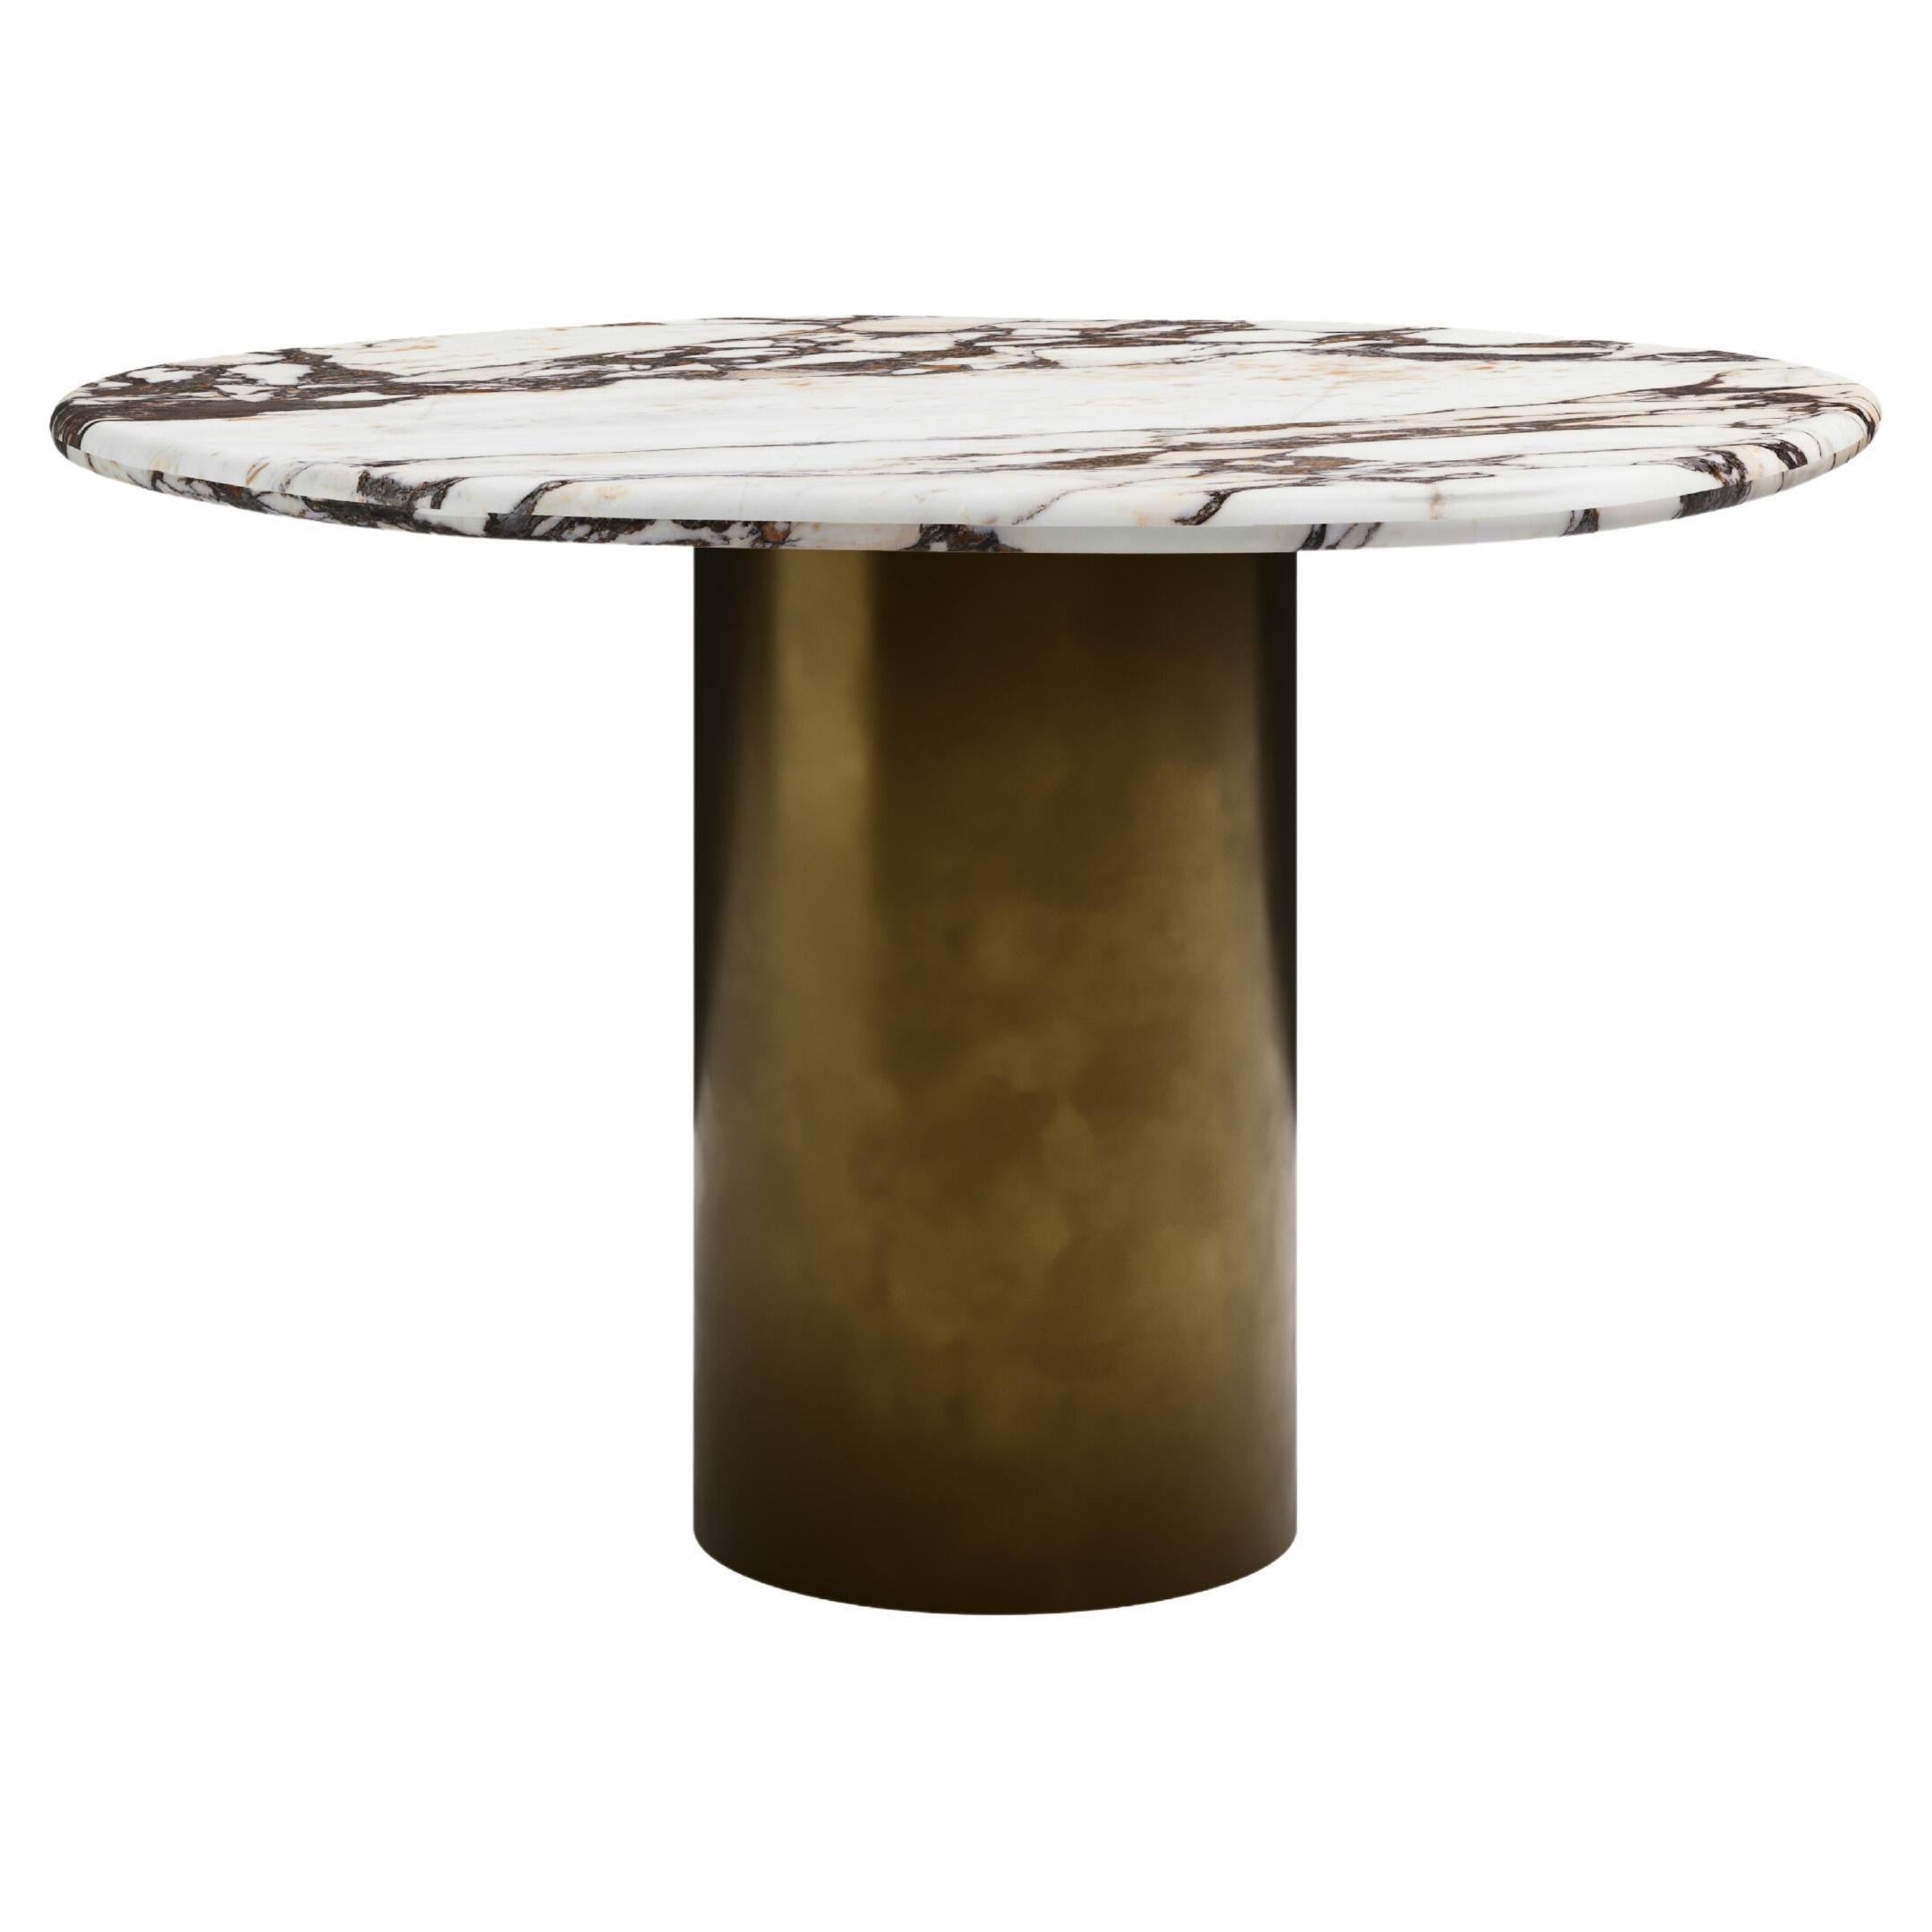 FORM(LA) Lago Round Dining Table 54”L x 54”W x 30”H Viola Marble & Bronze For Sale